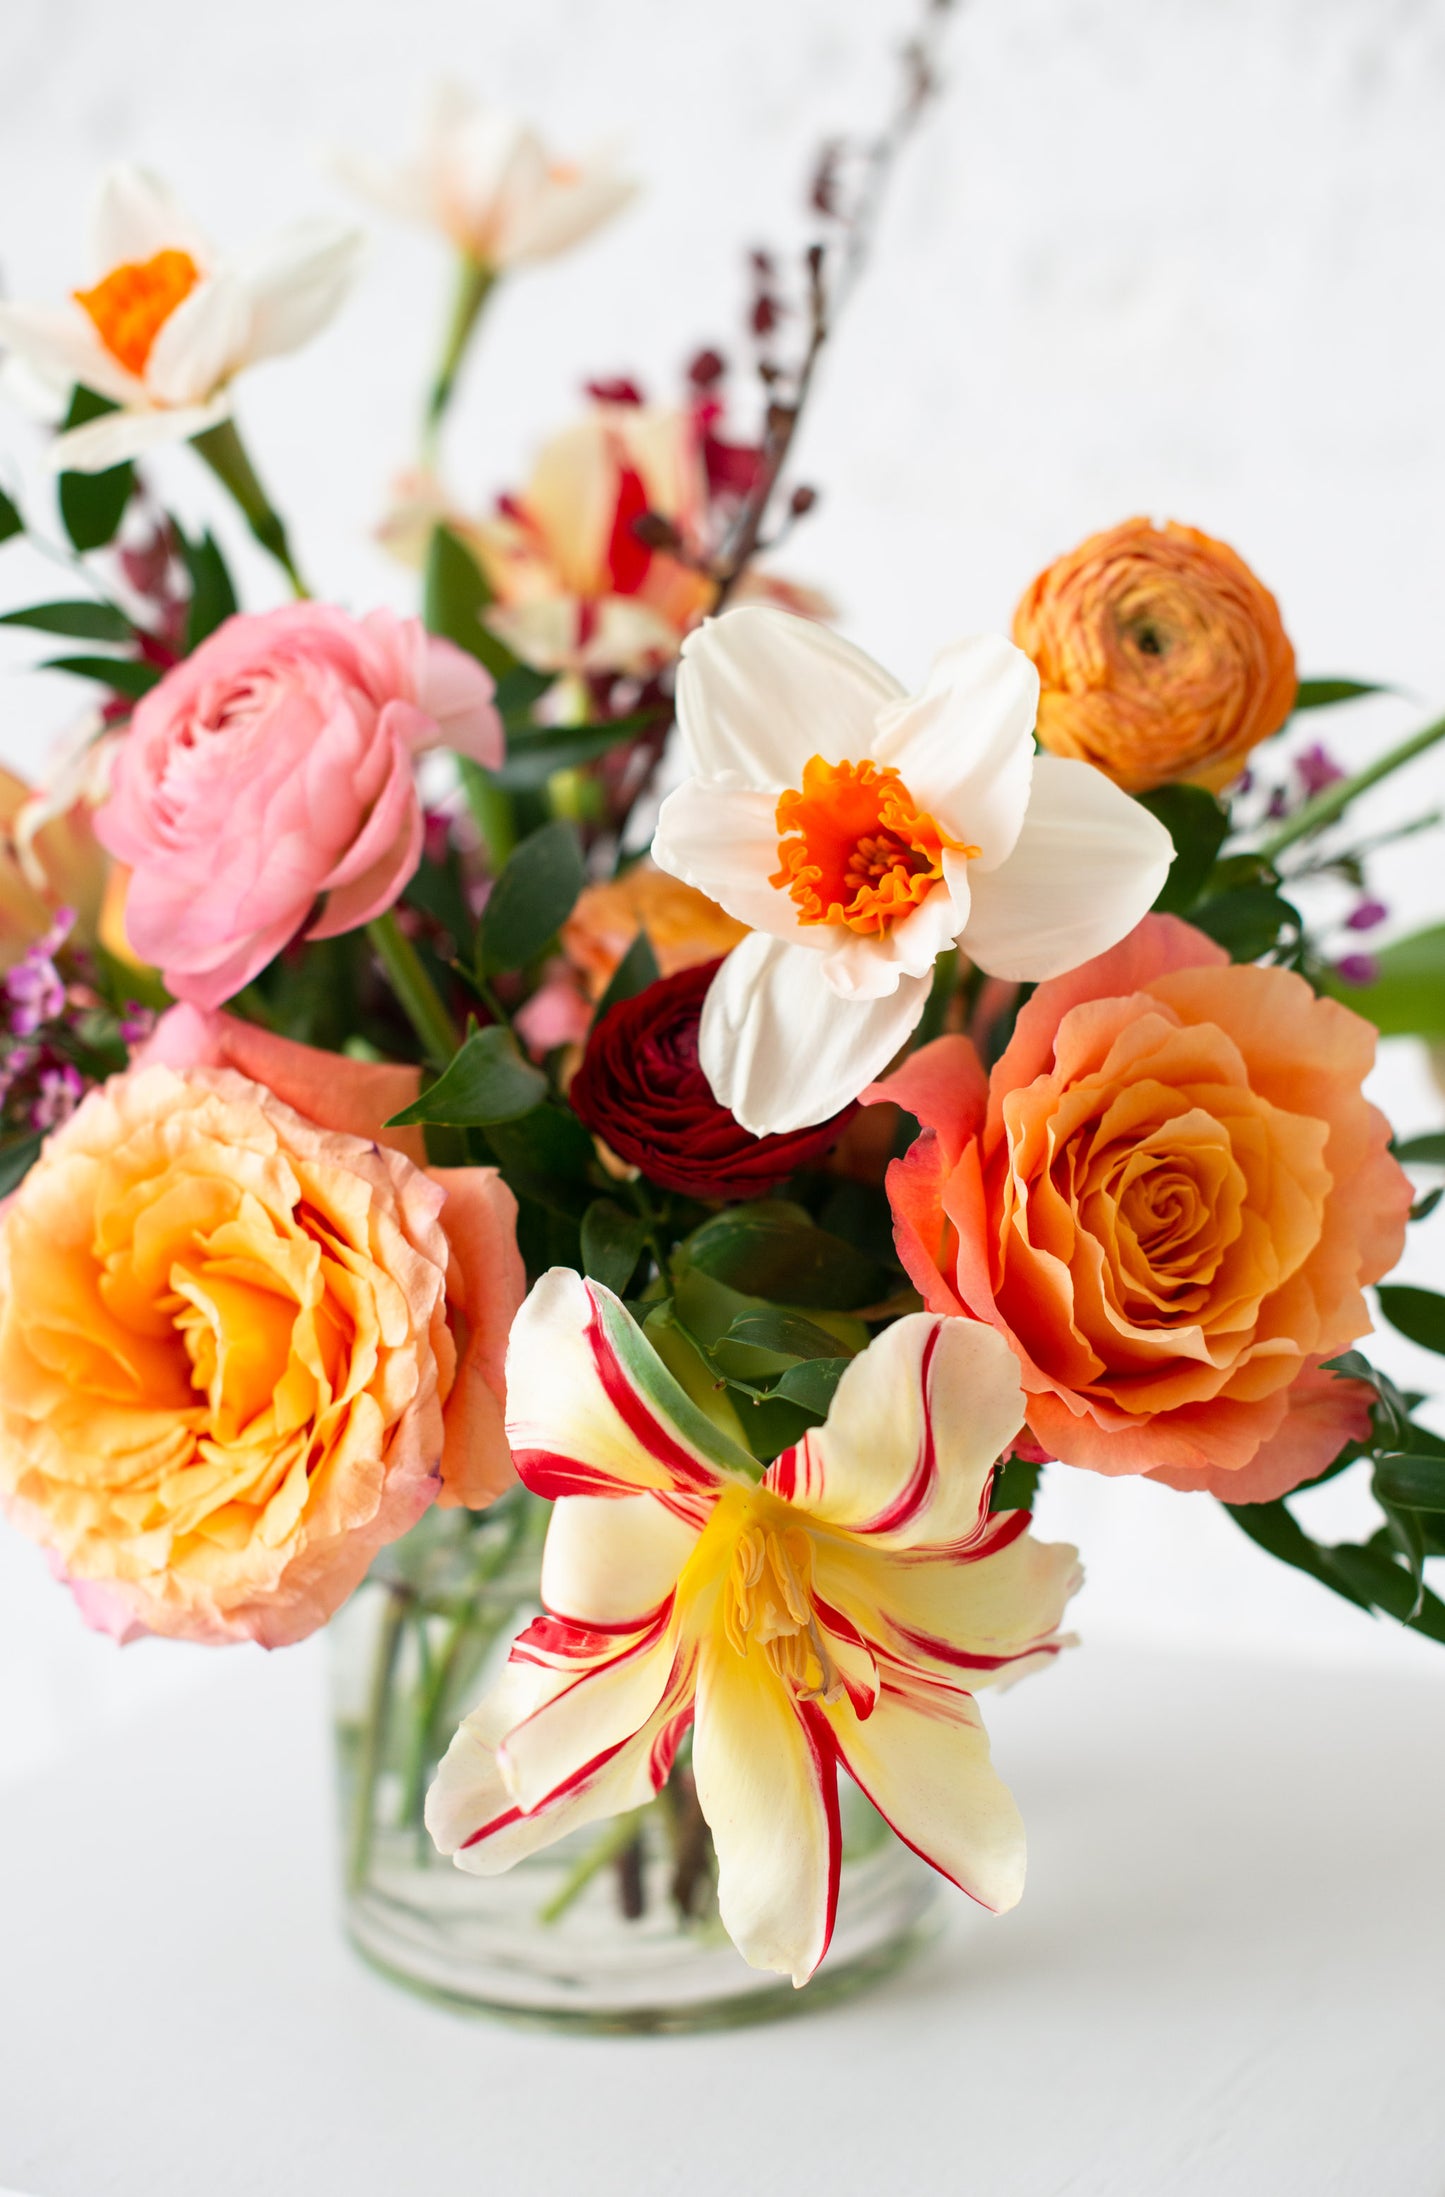 Spring Equinox | vase arrangement